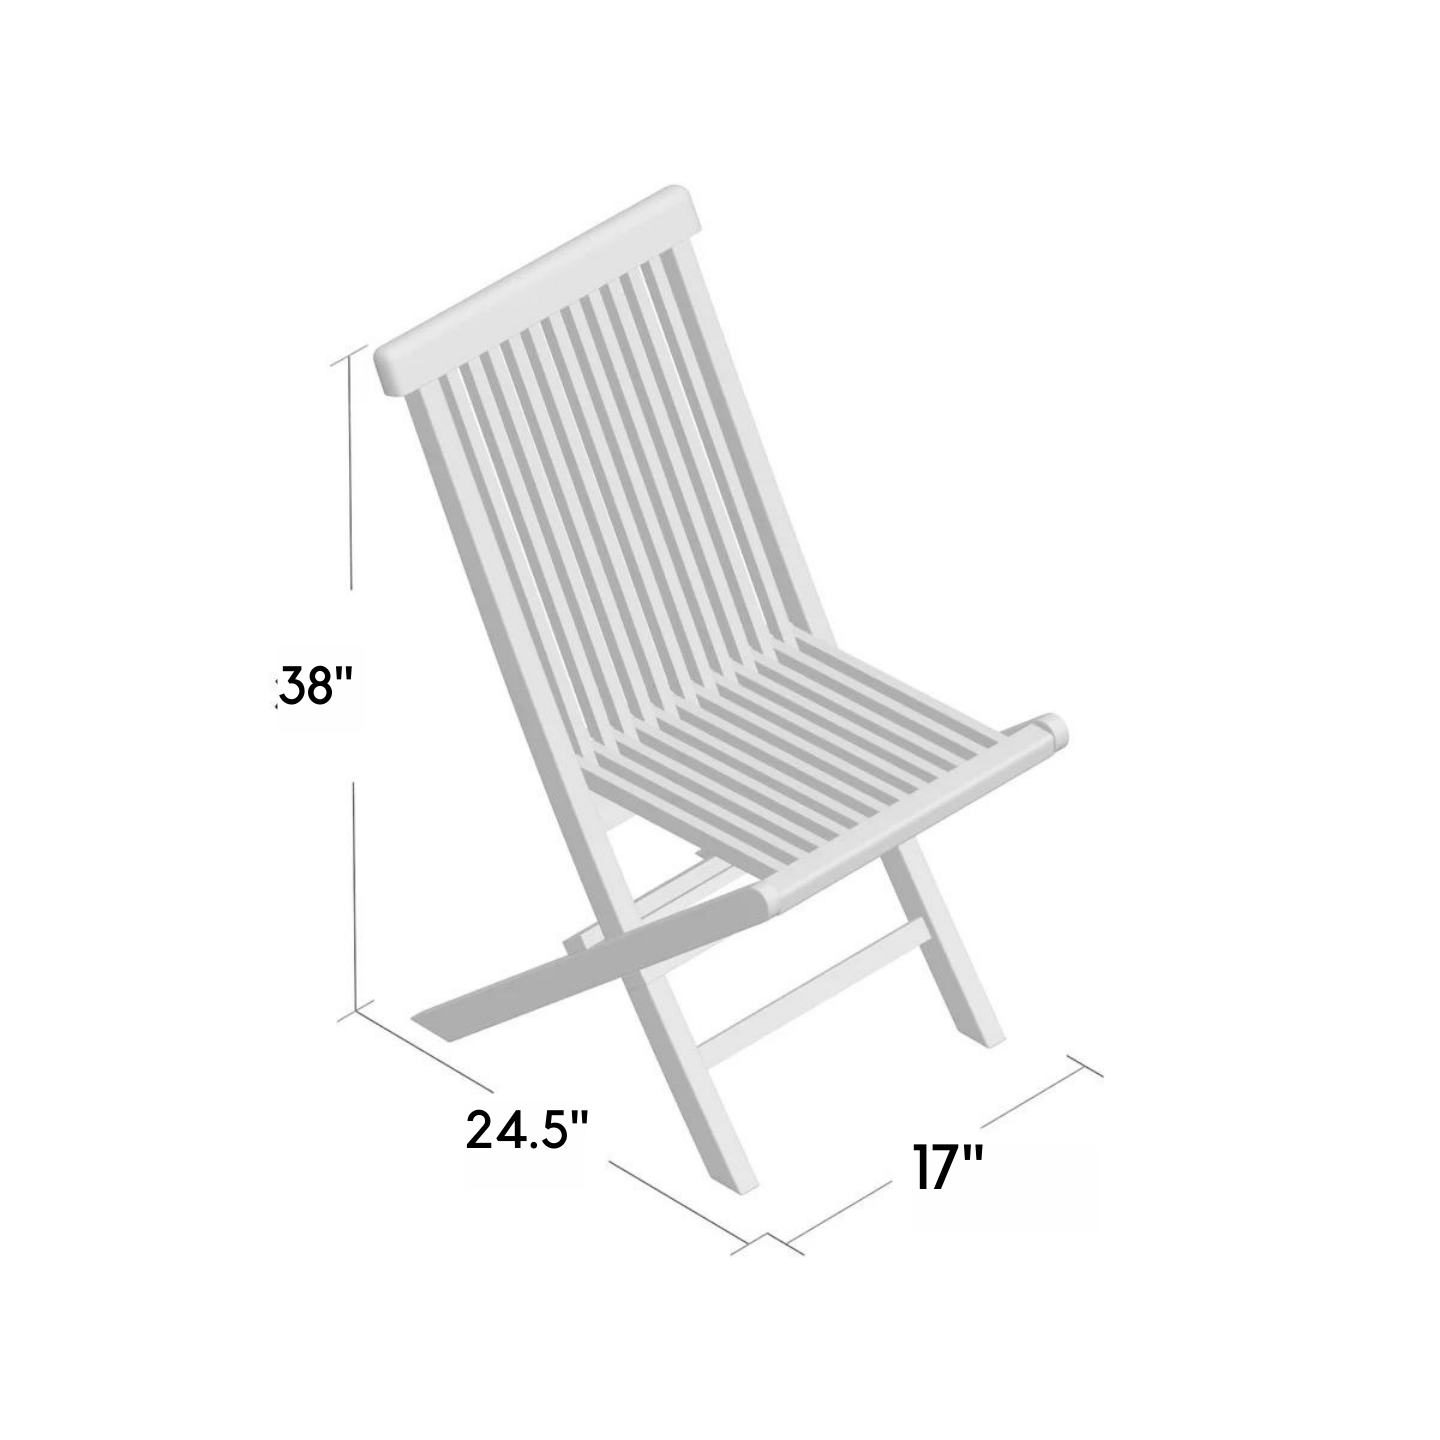 sohoConcept Outdoor Chairs Pedasa Teak Patio Chairs Folding